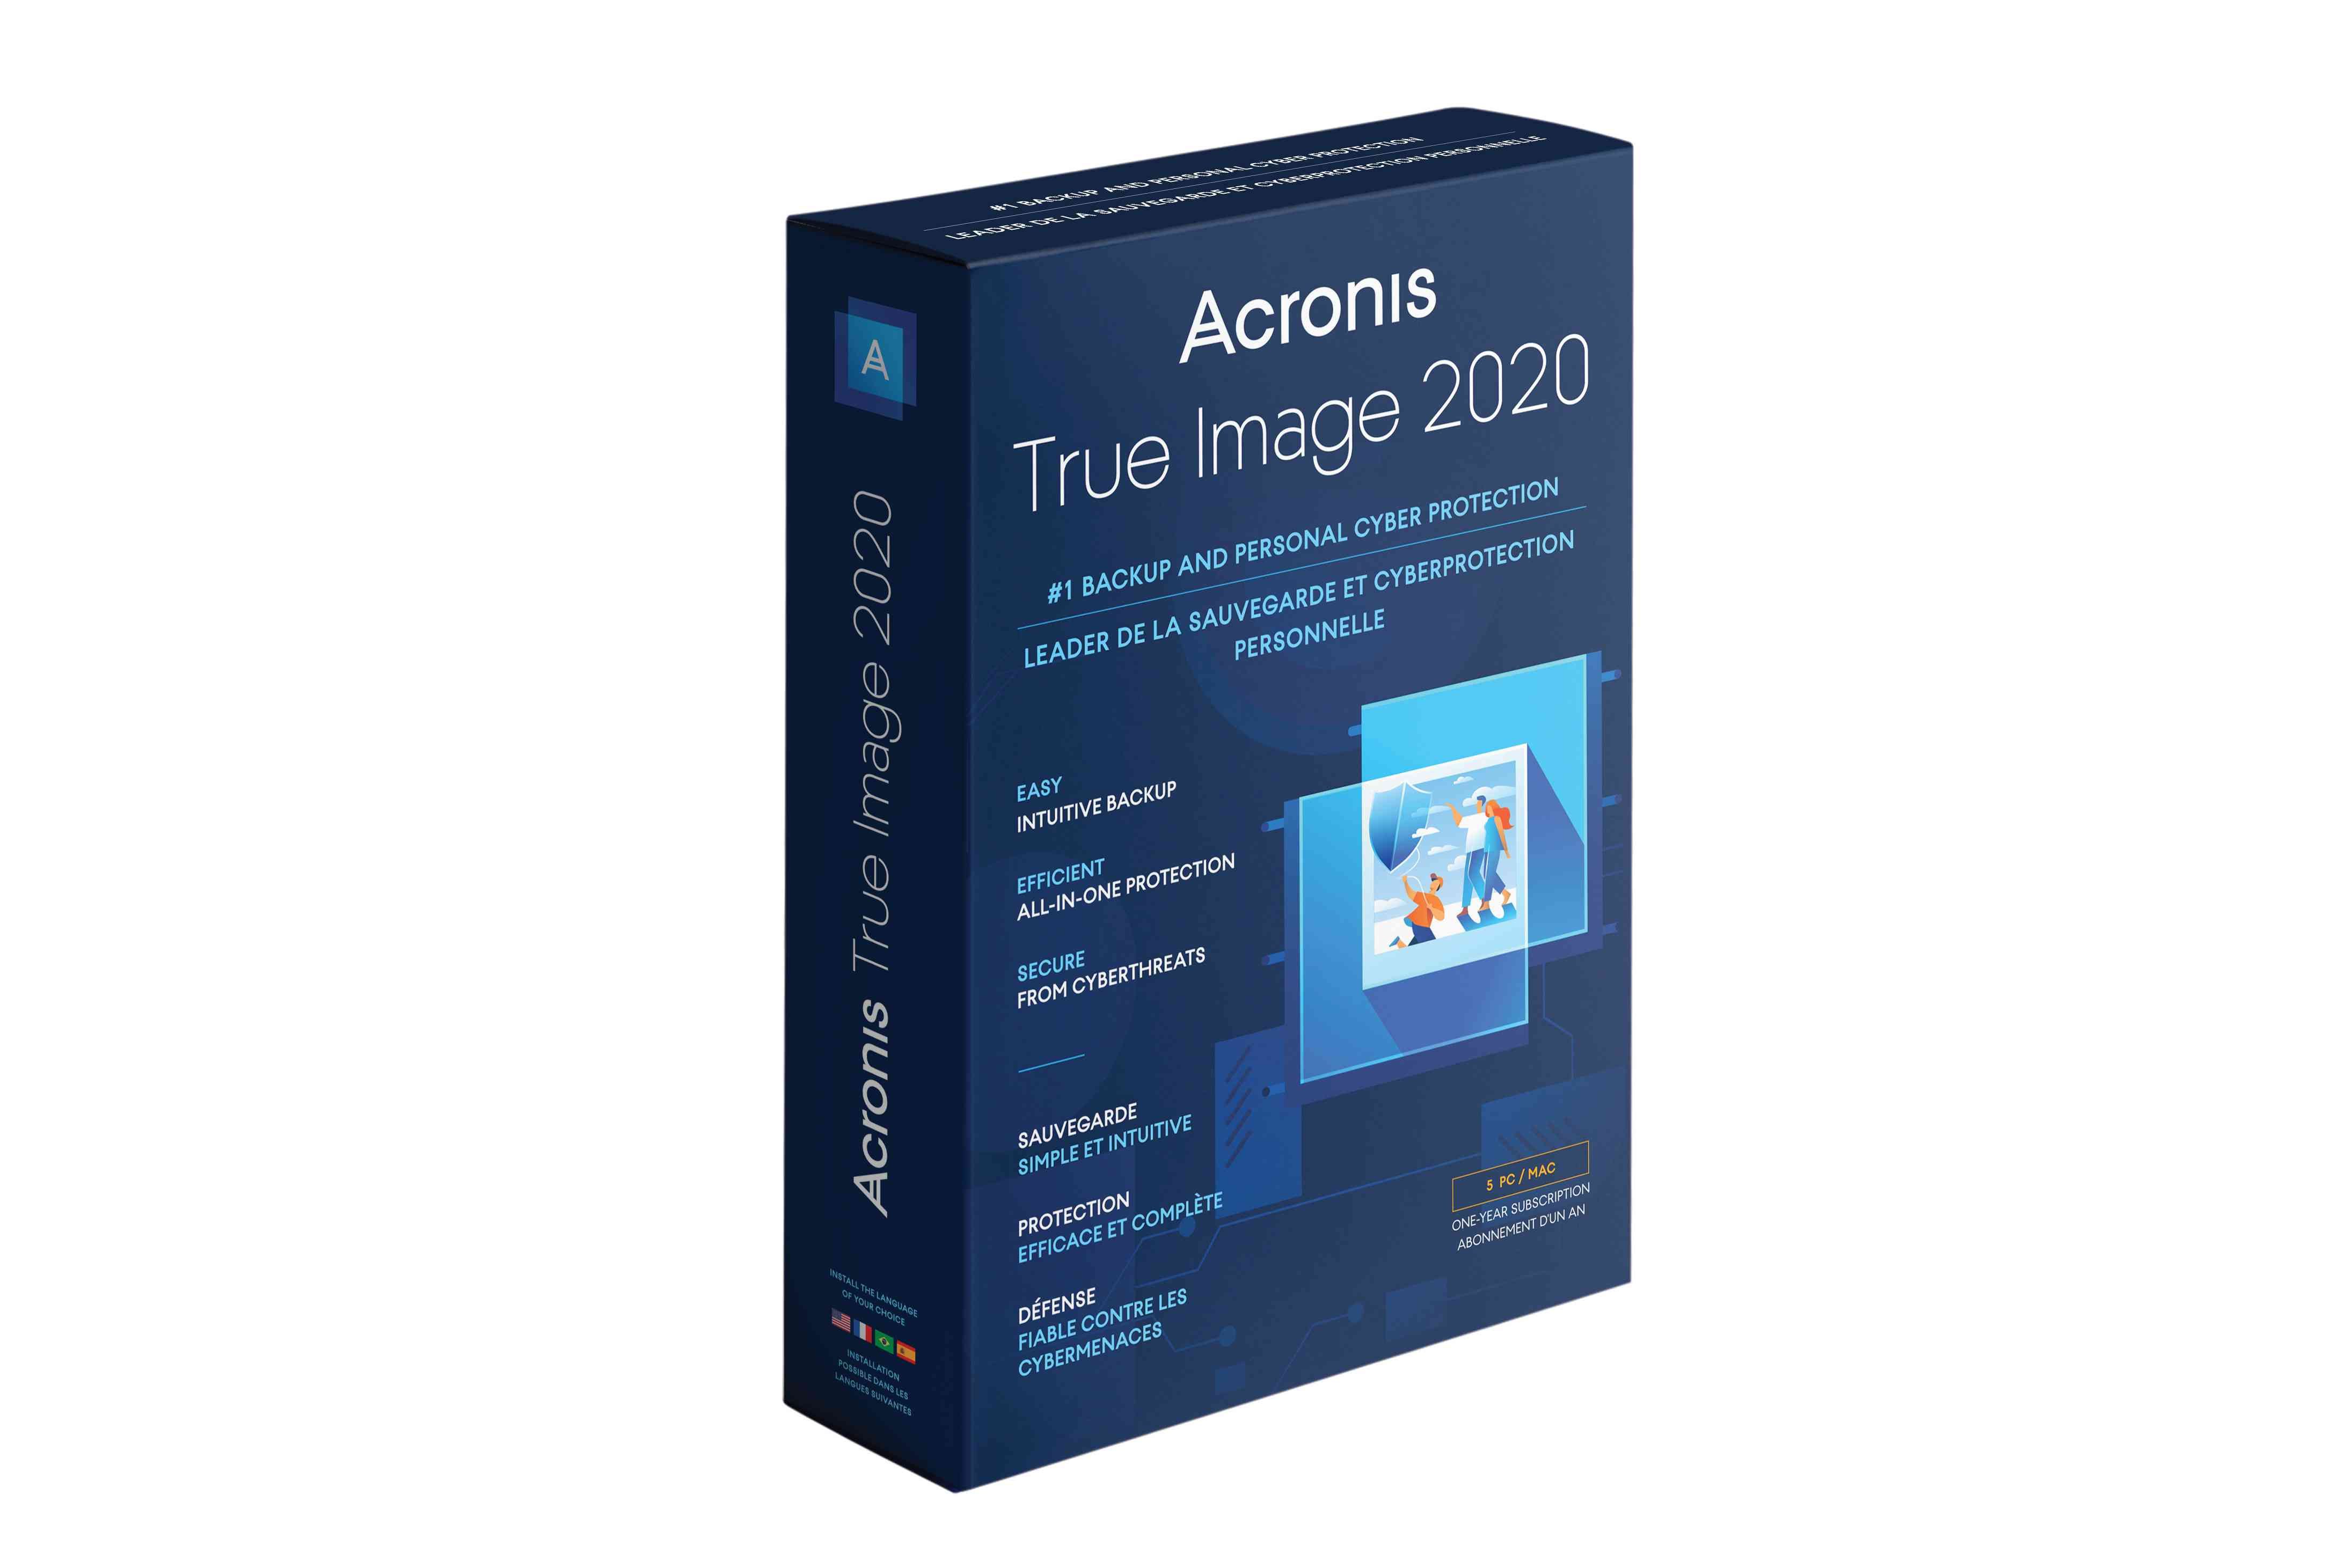 Acronis True Image 2020 box